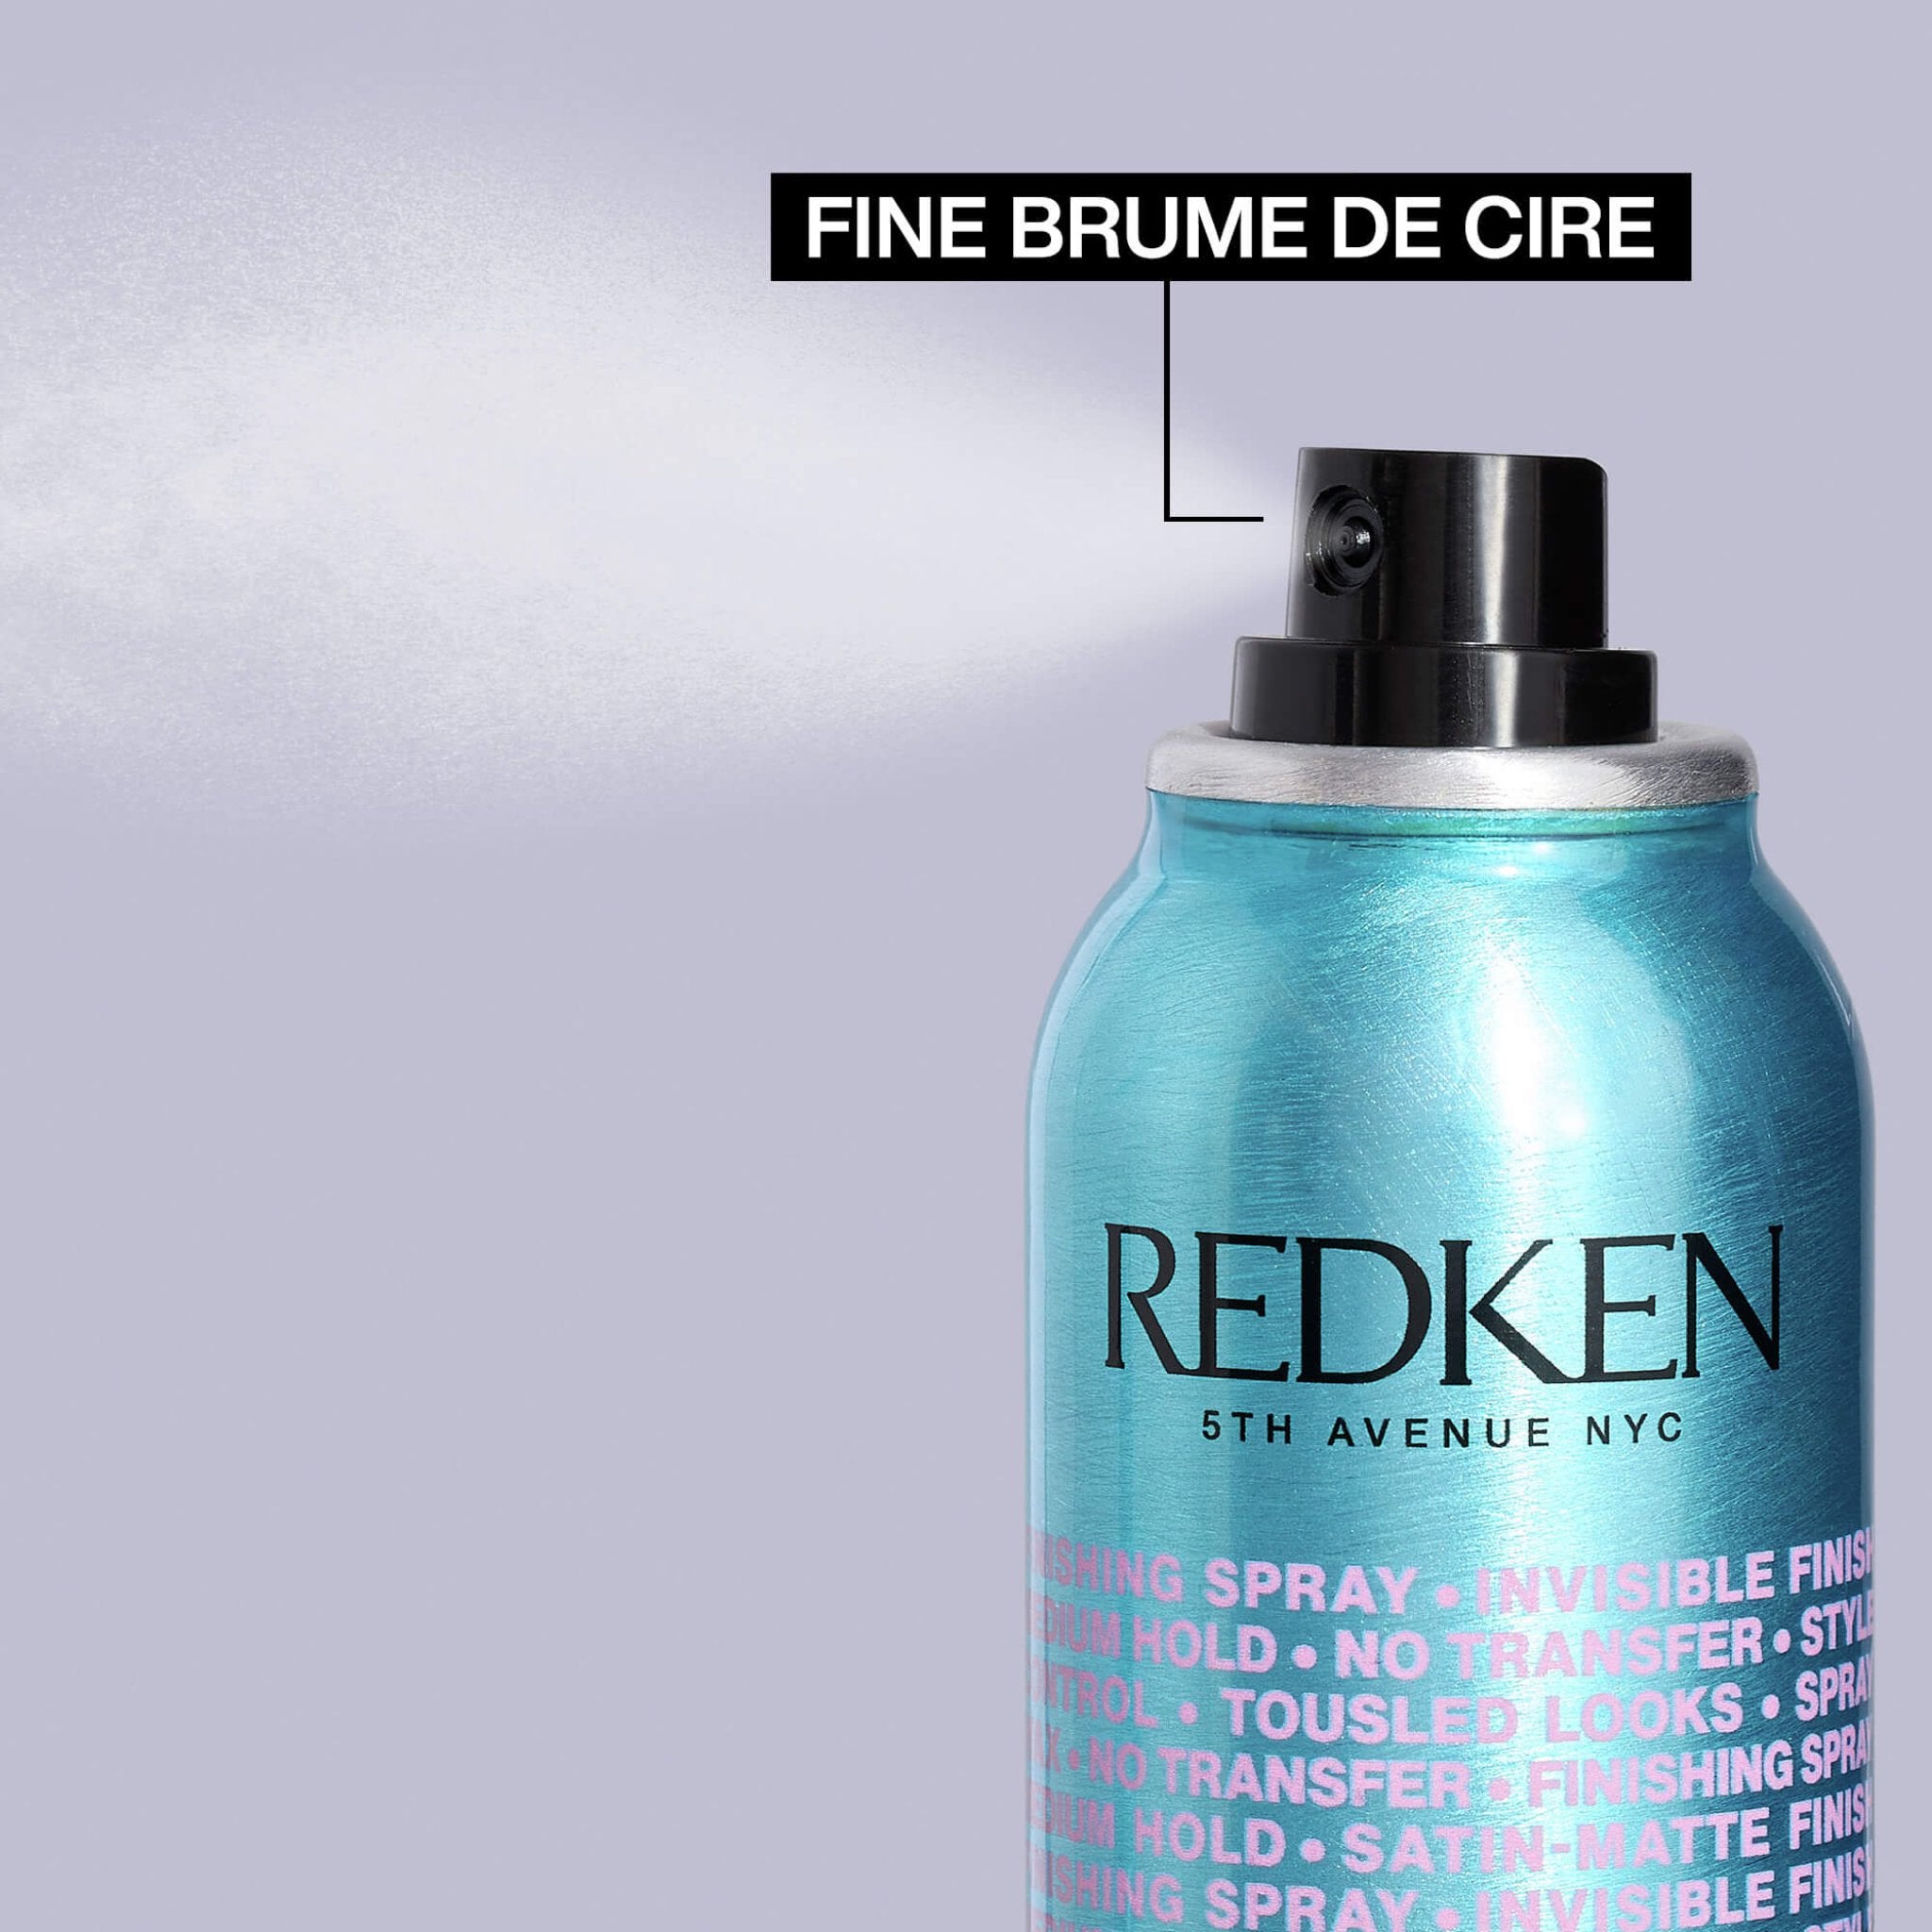 Redken. Cire De Finition Spray Wax - 156 gr - Concept C. Shop